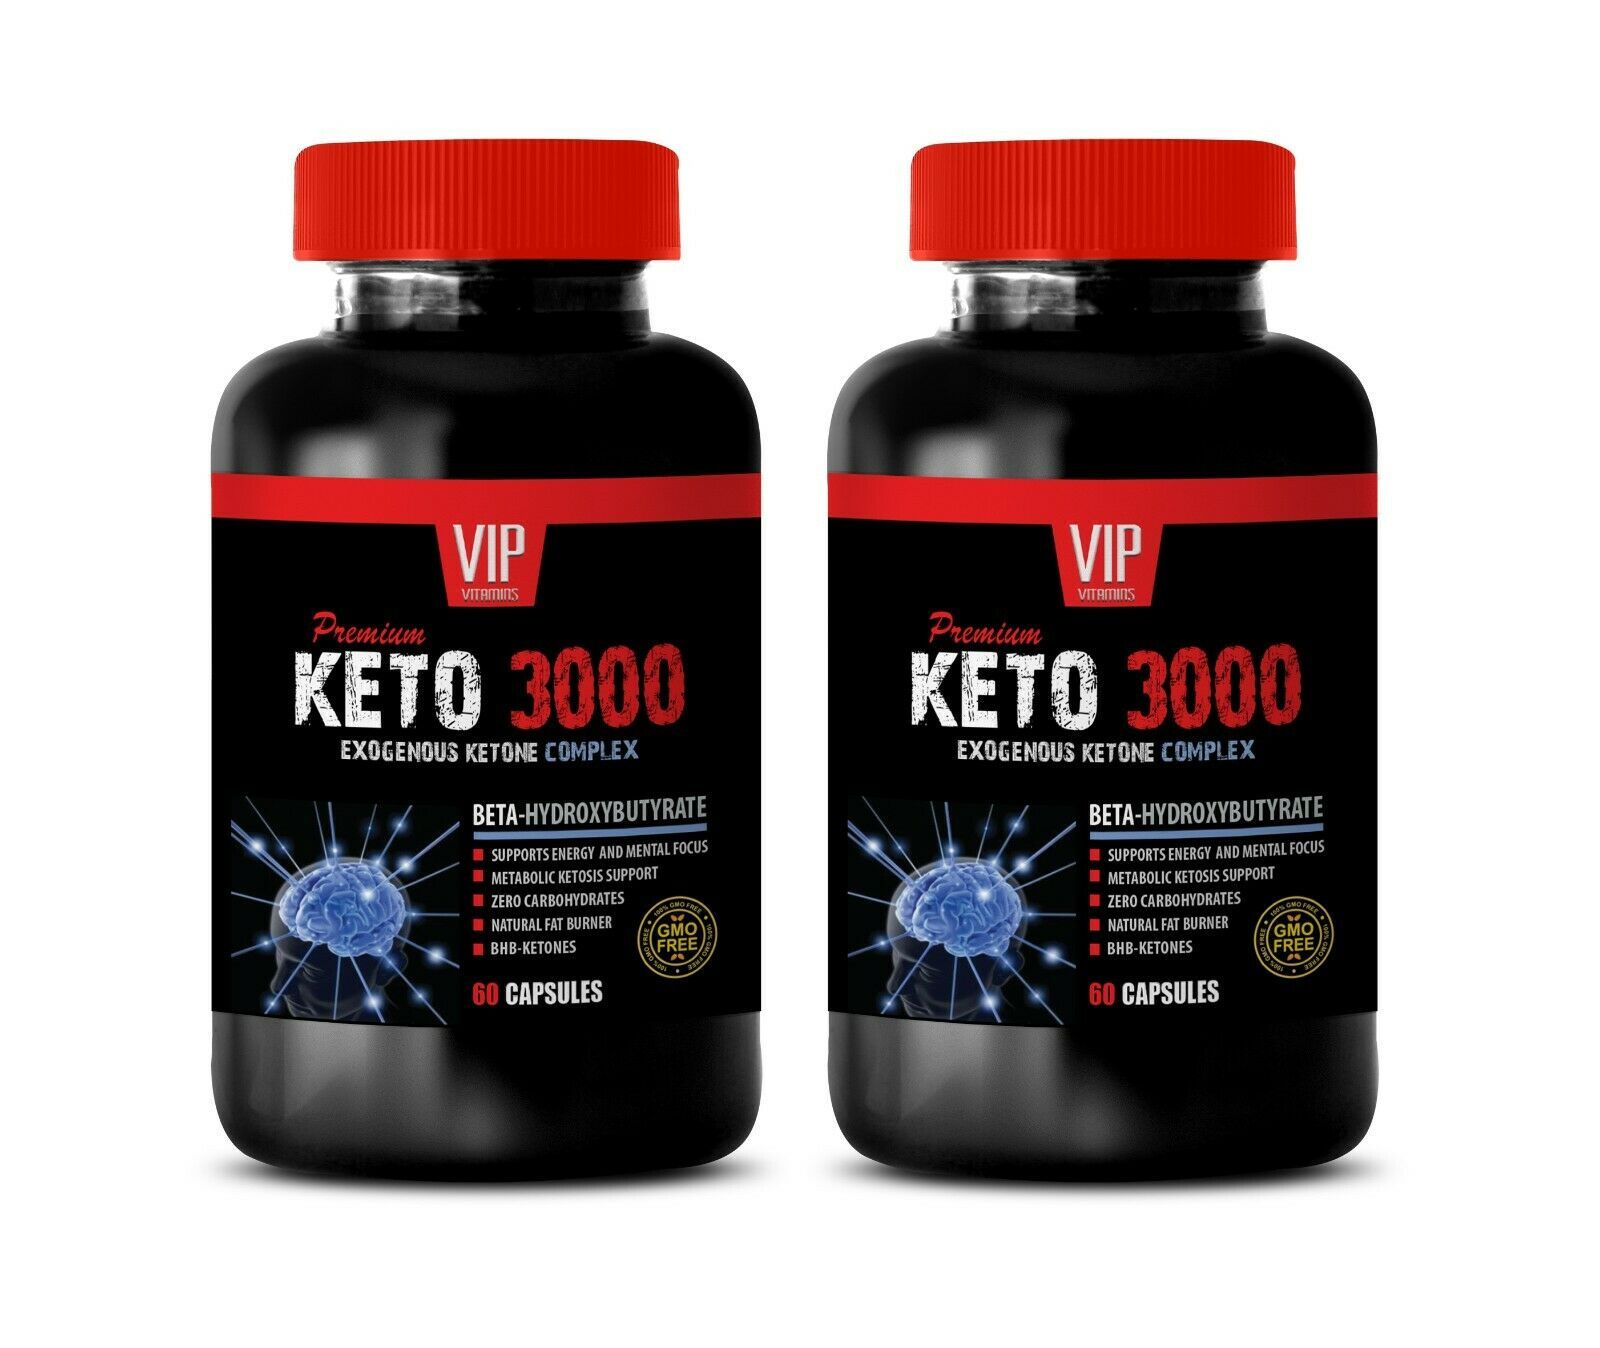 boost energy levels & speed metabolism - KETO 3000 - heart promoter 2 BOTTLE - $28.01